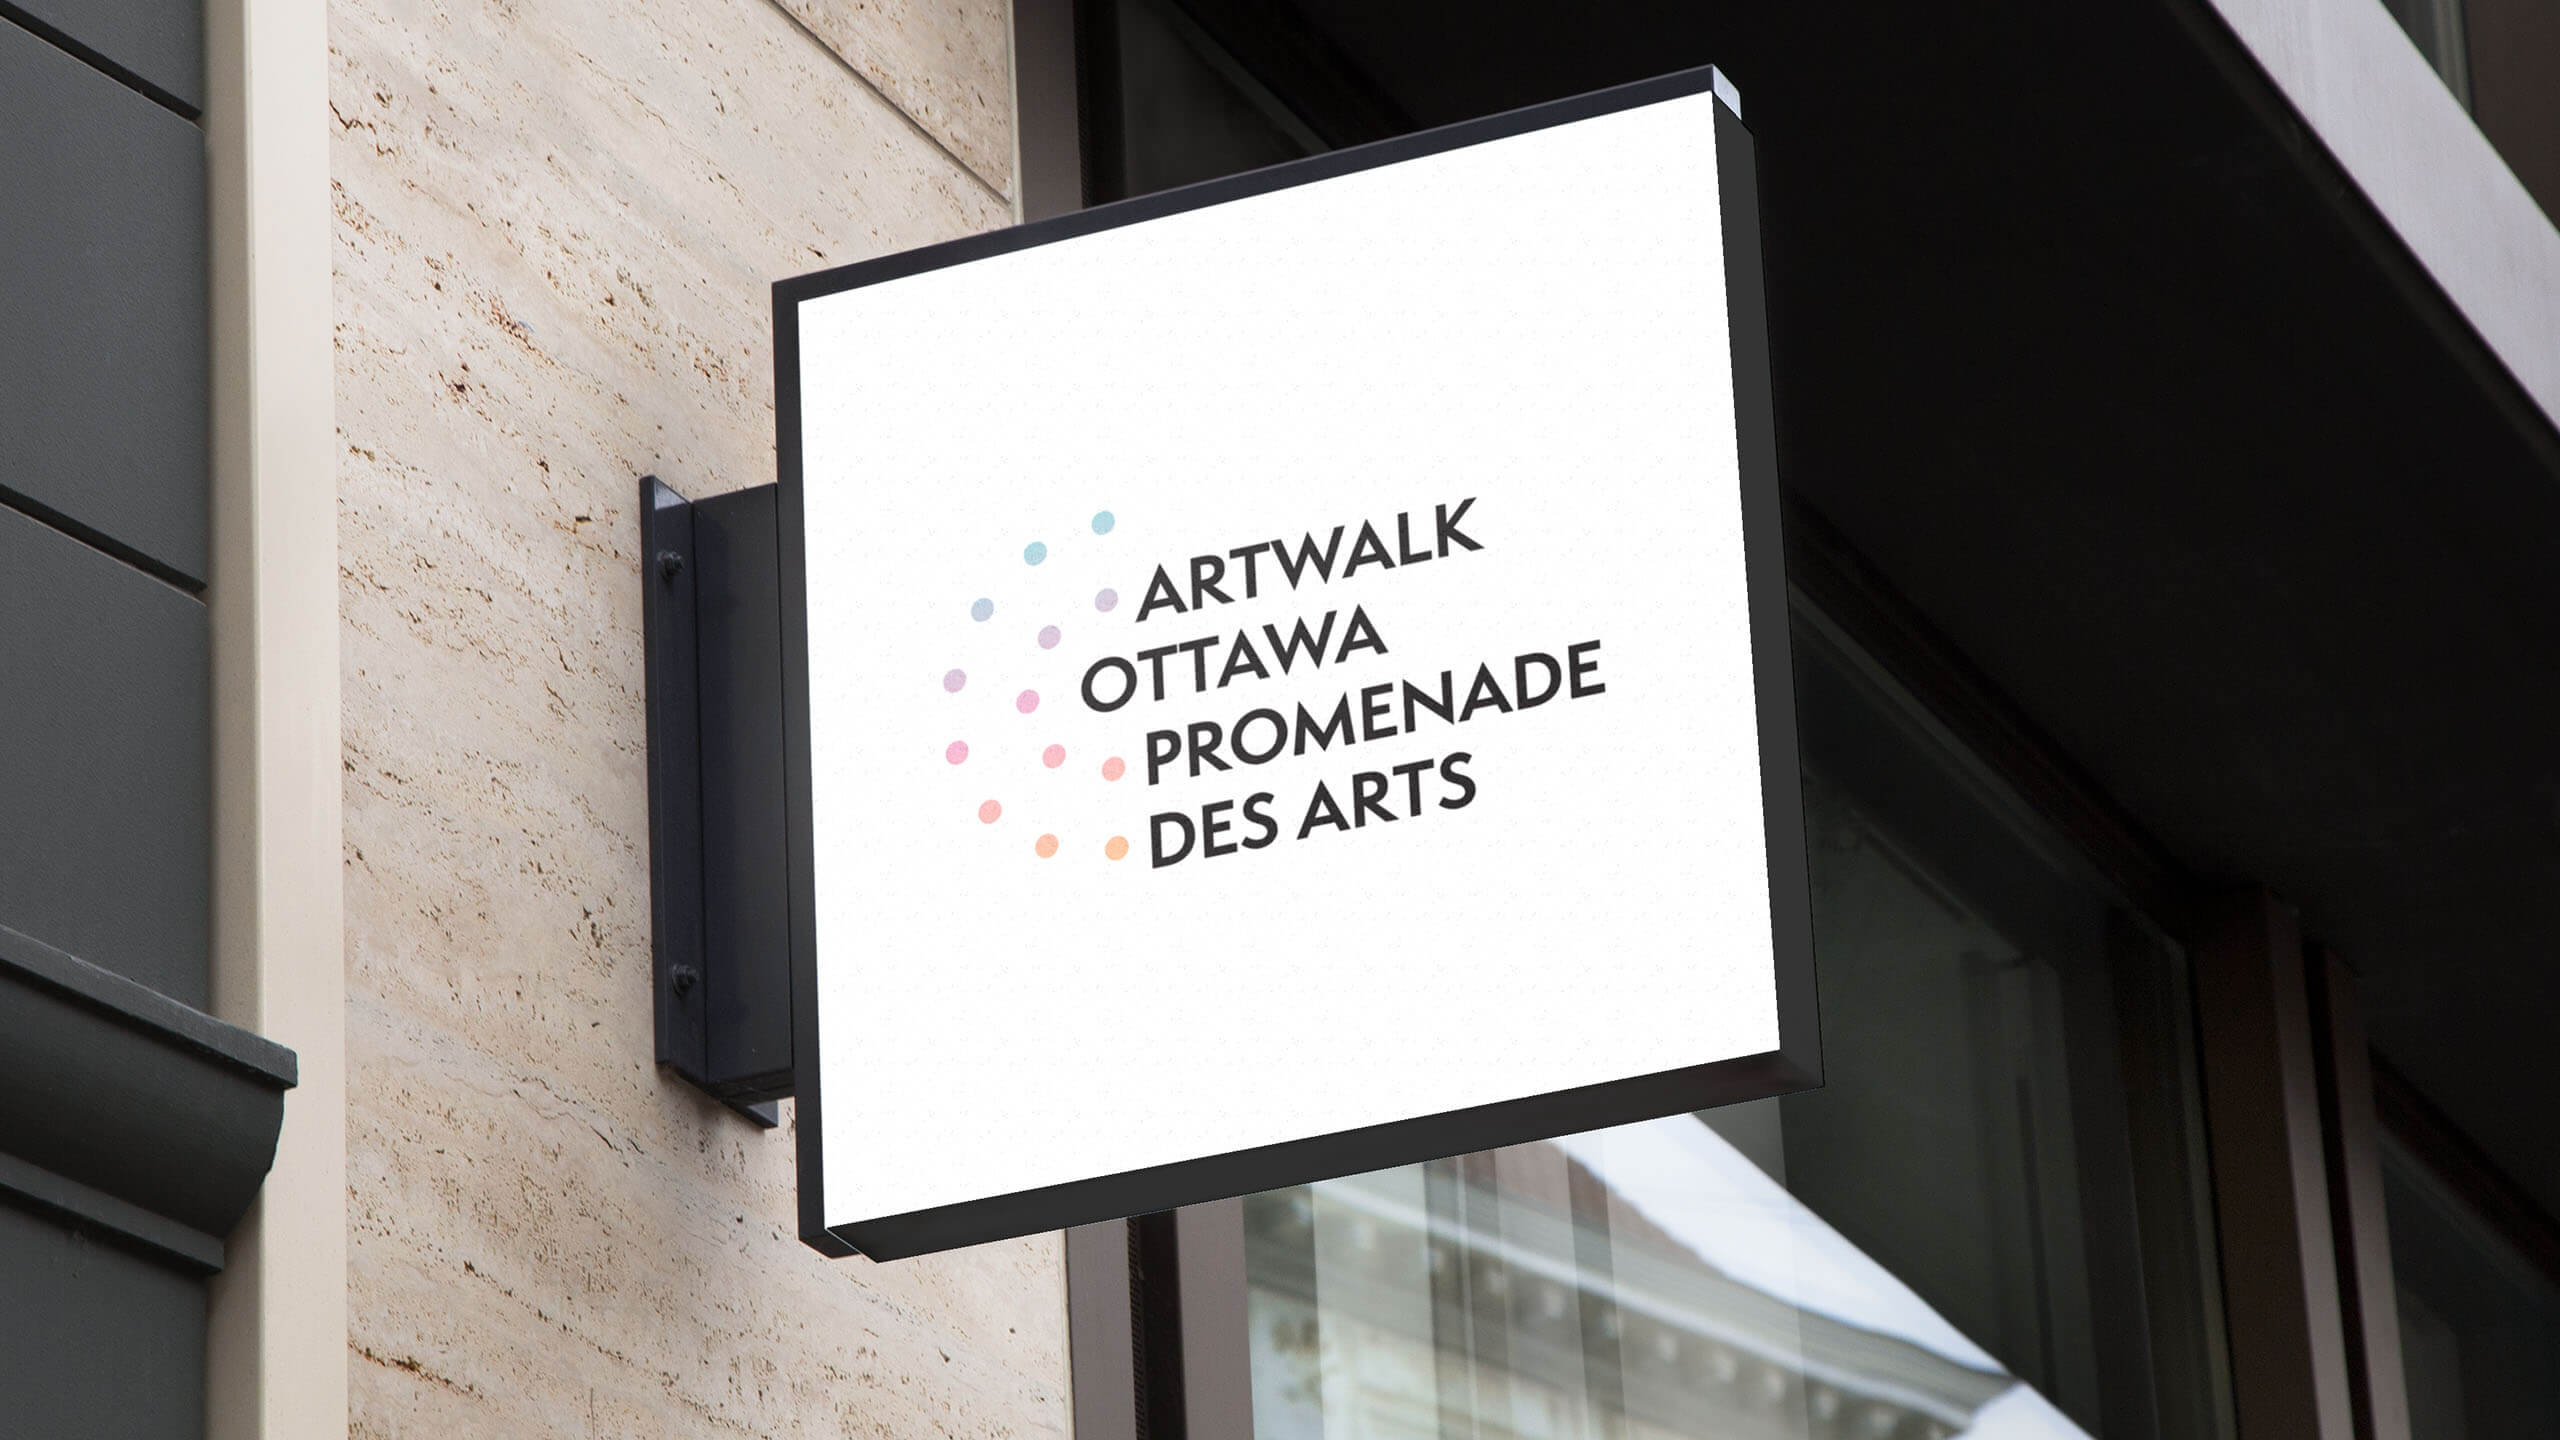 Artwalk Ottawa Promenade des Arts signage by The Coopers